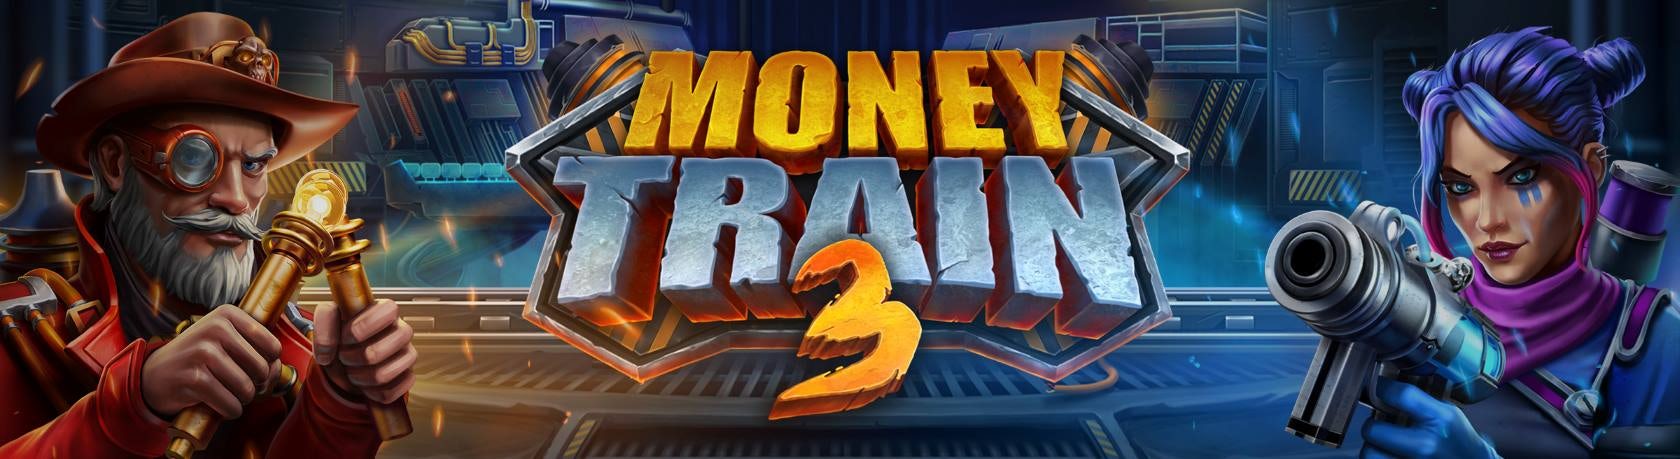 Money-Train-3-1680x600